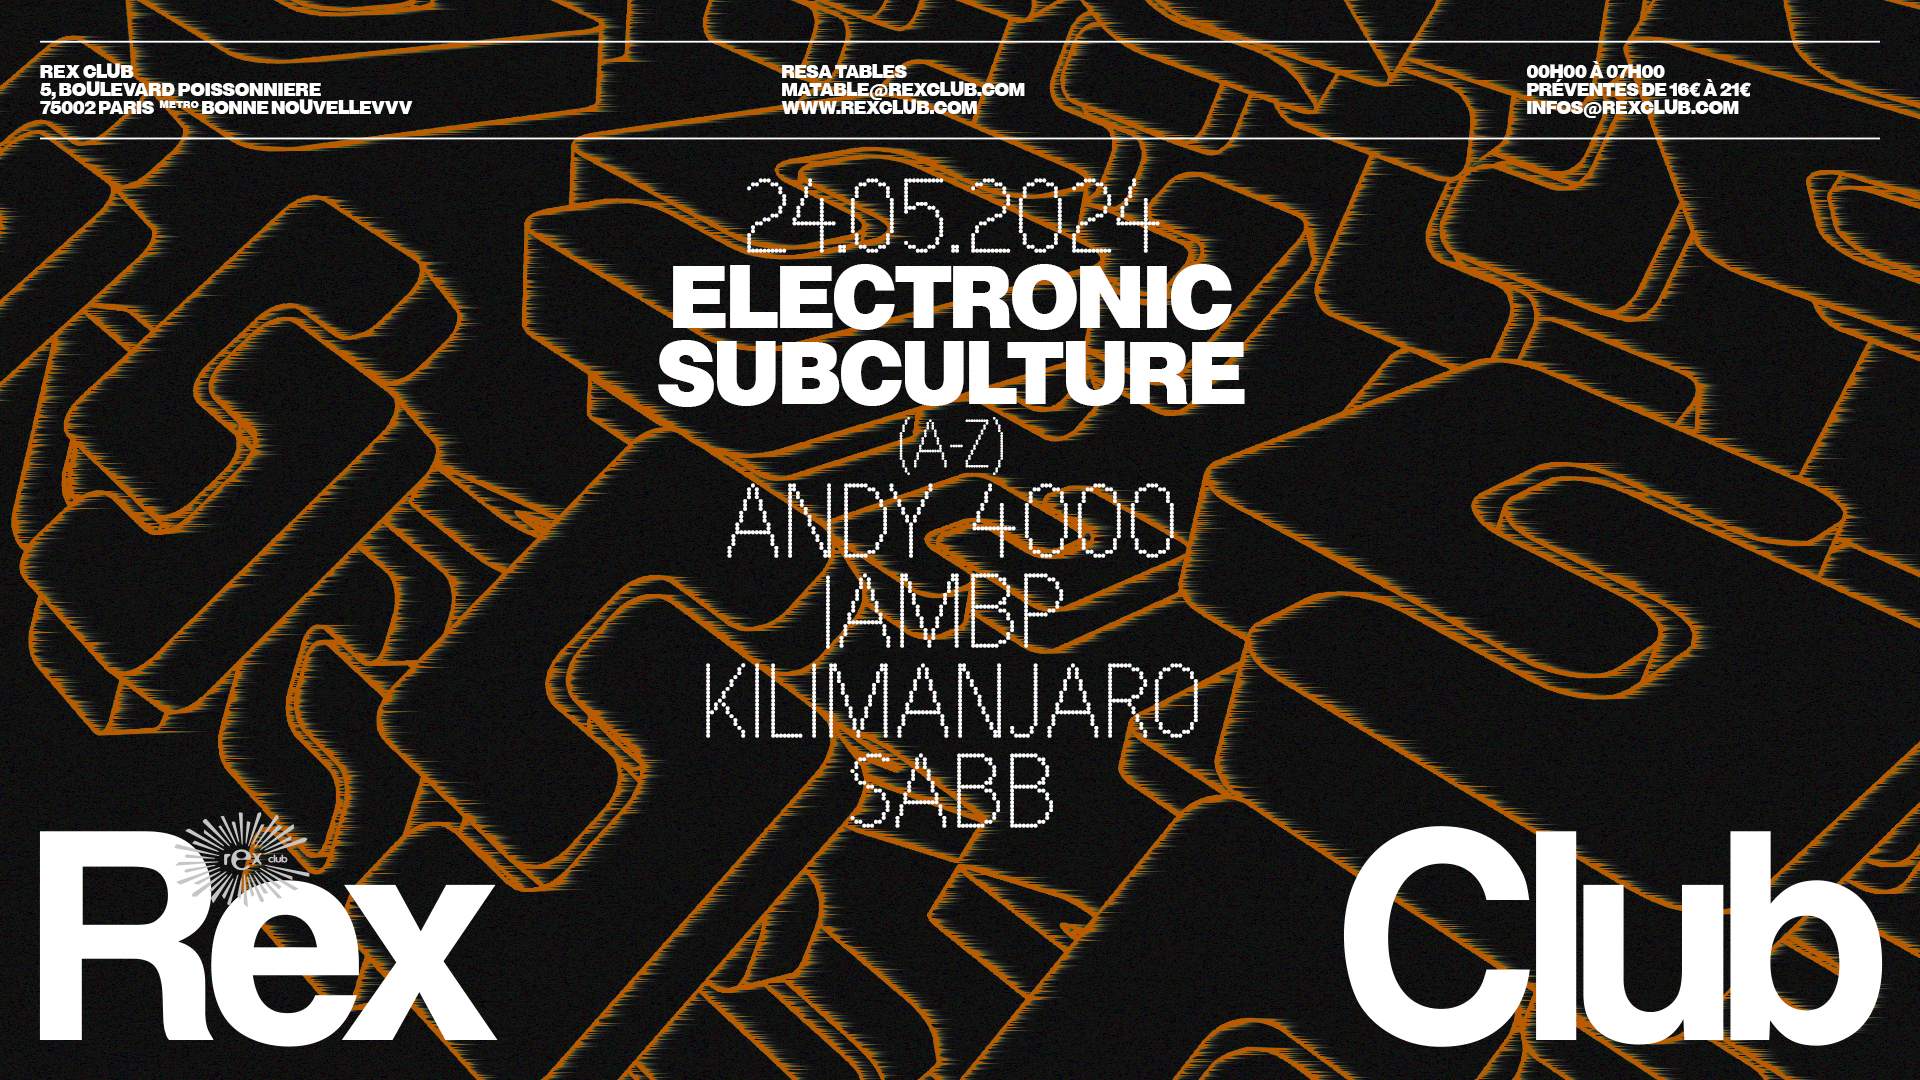 Electronic Subculture: Andy4000, IAMBP, KILIMANJARO, Sabb - フライヤー表